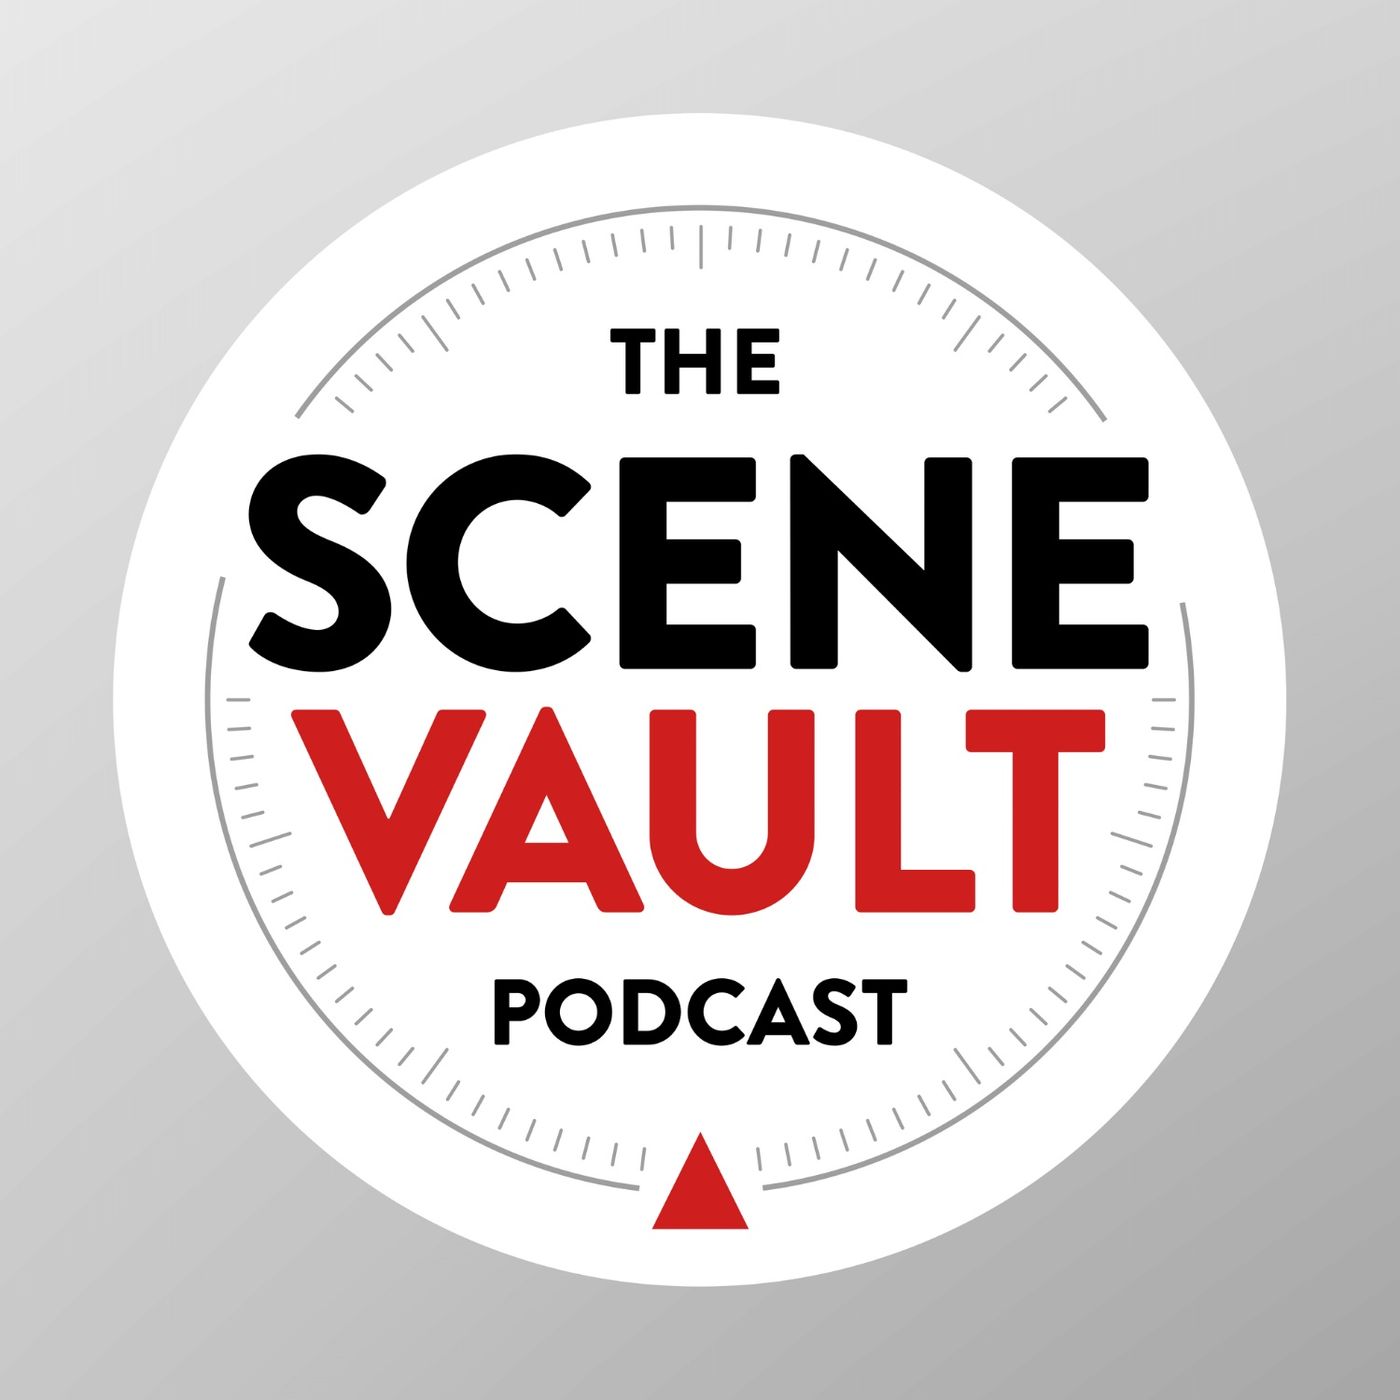 The Scene Vault Podcast